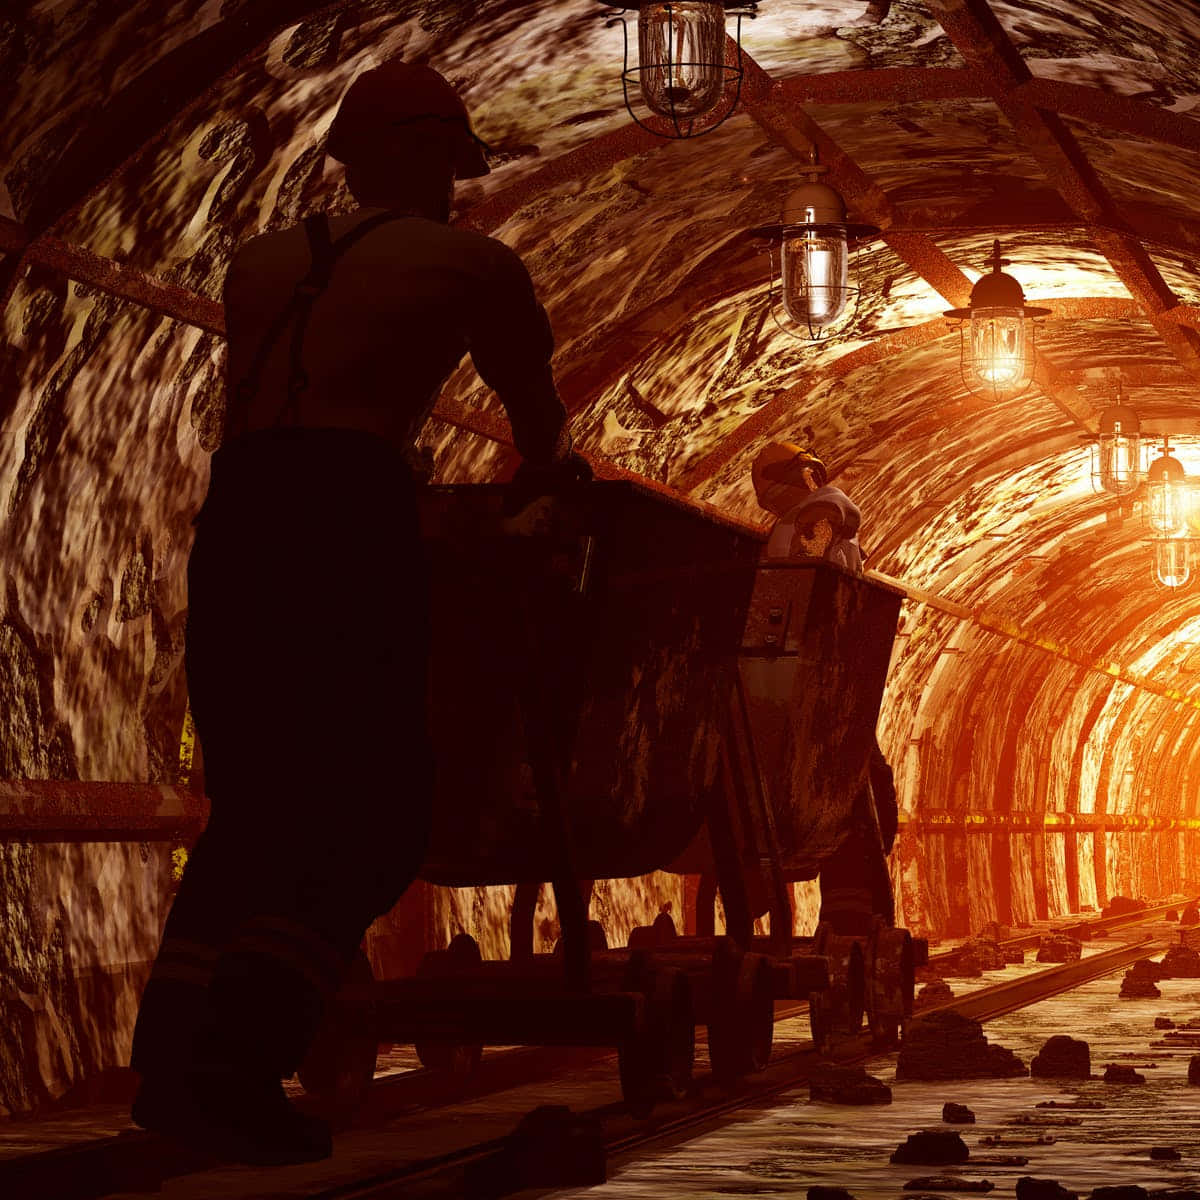 Miners hard at work in a coal mine